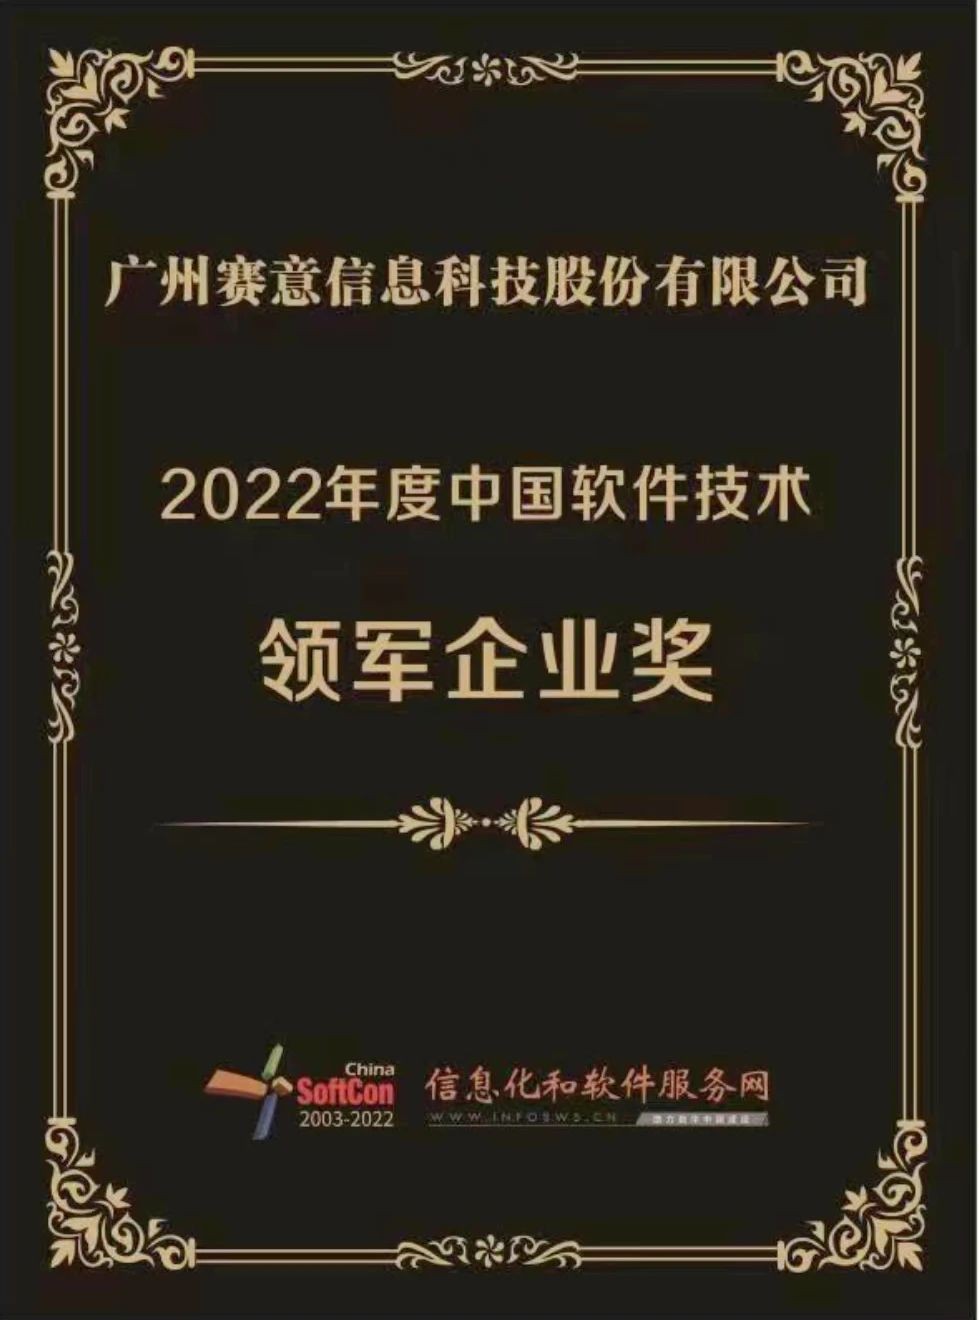 2022 China Software Technology Leading Enterprise Award